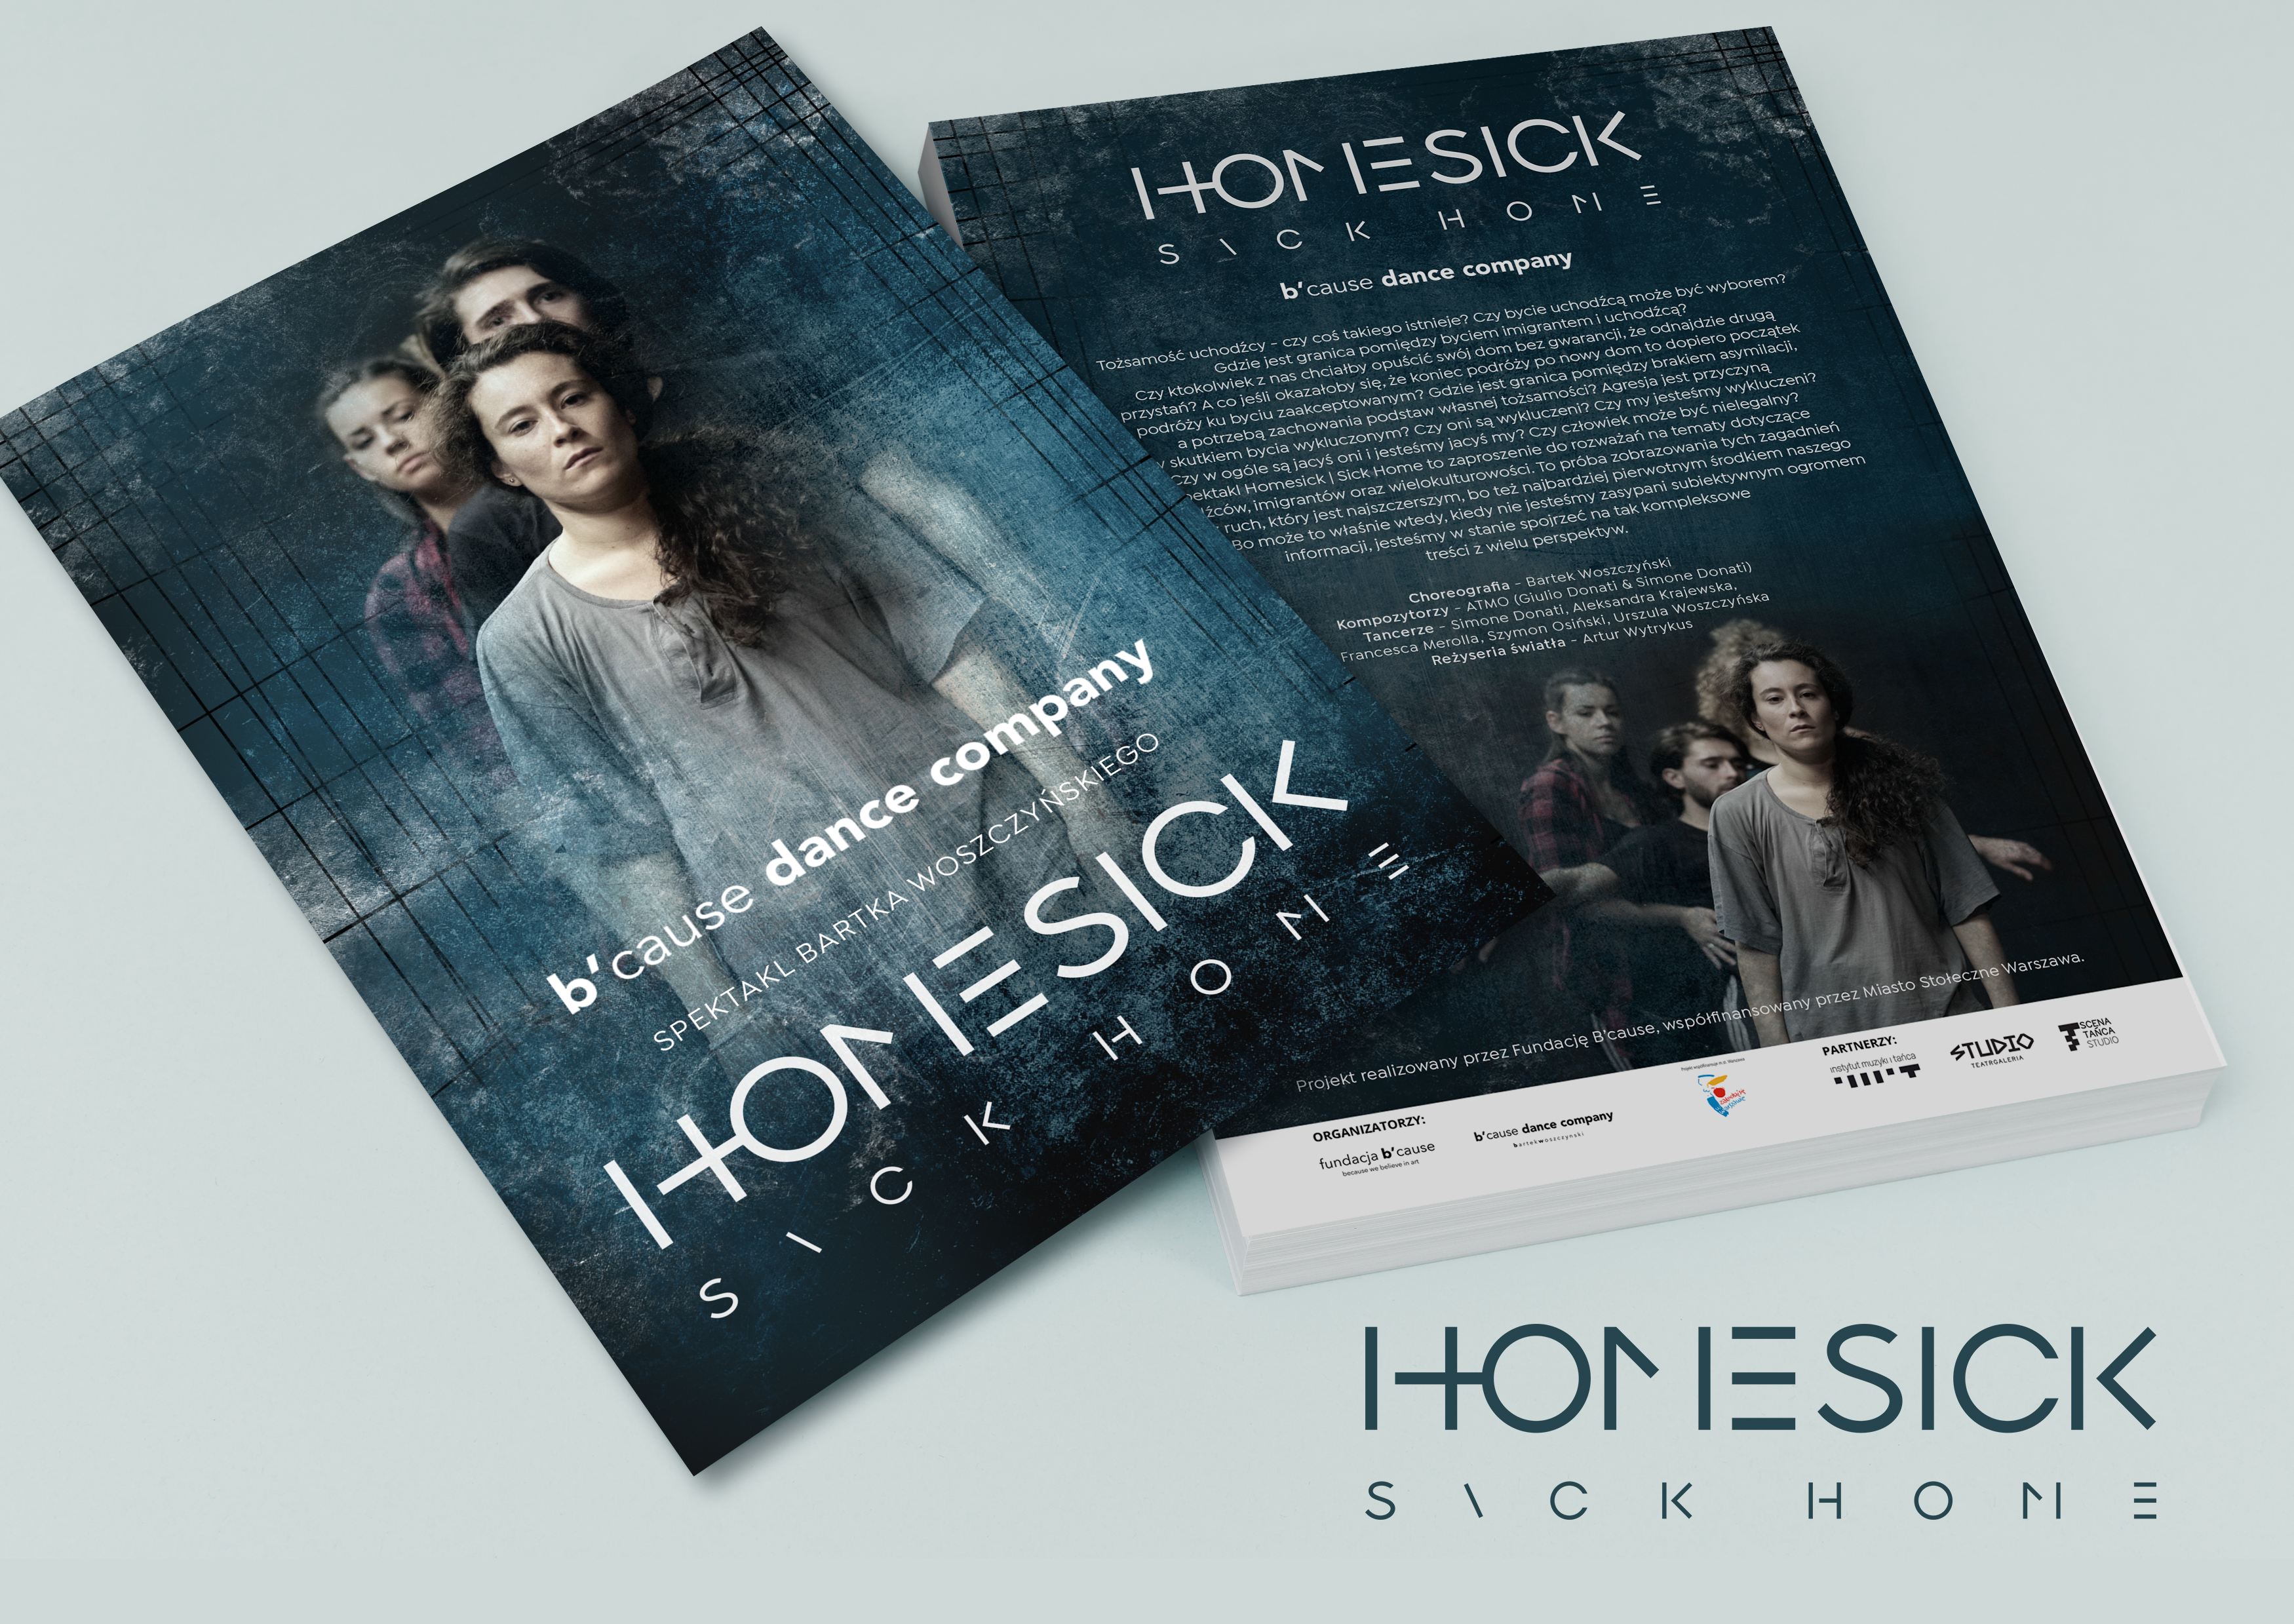 Homesick - sick home 3